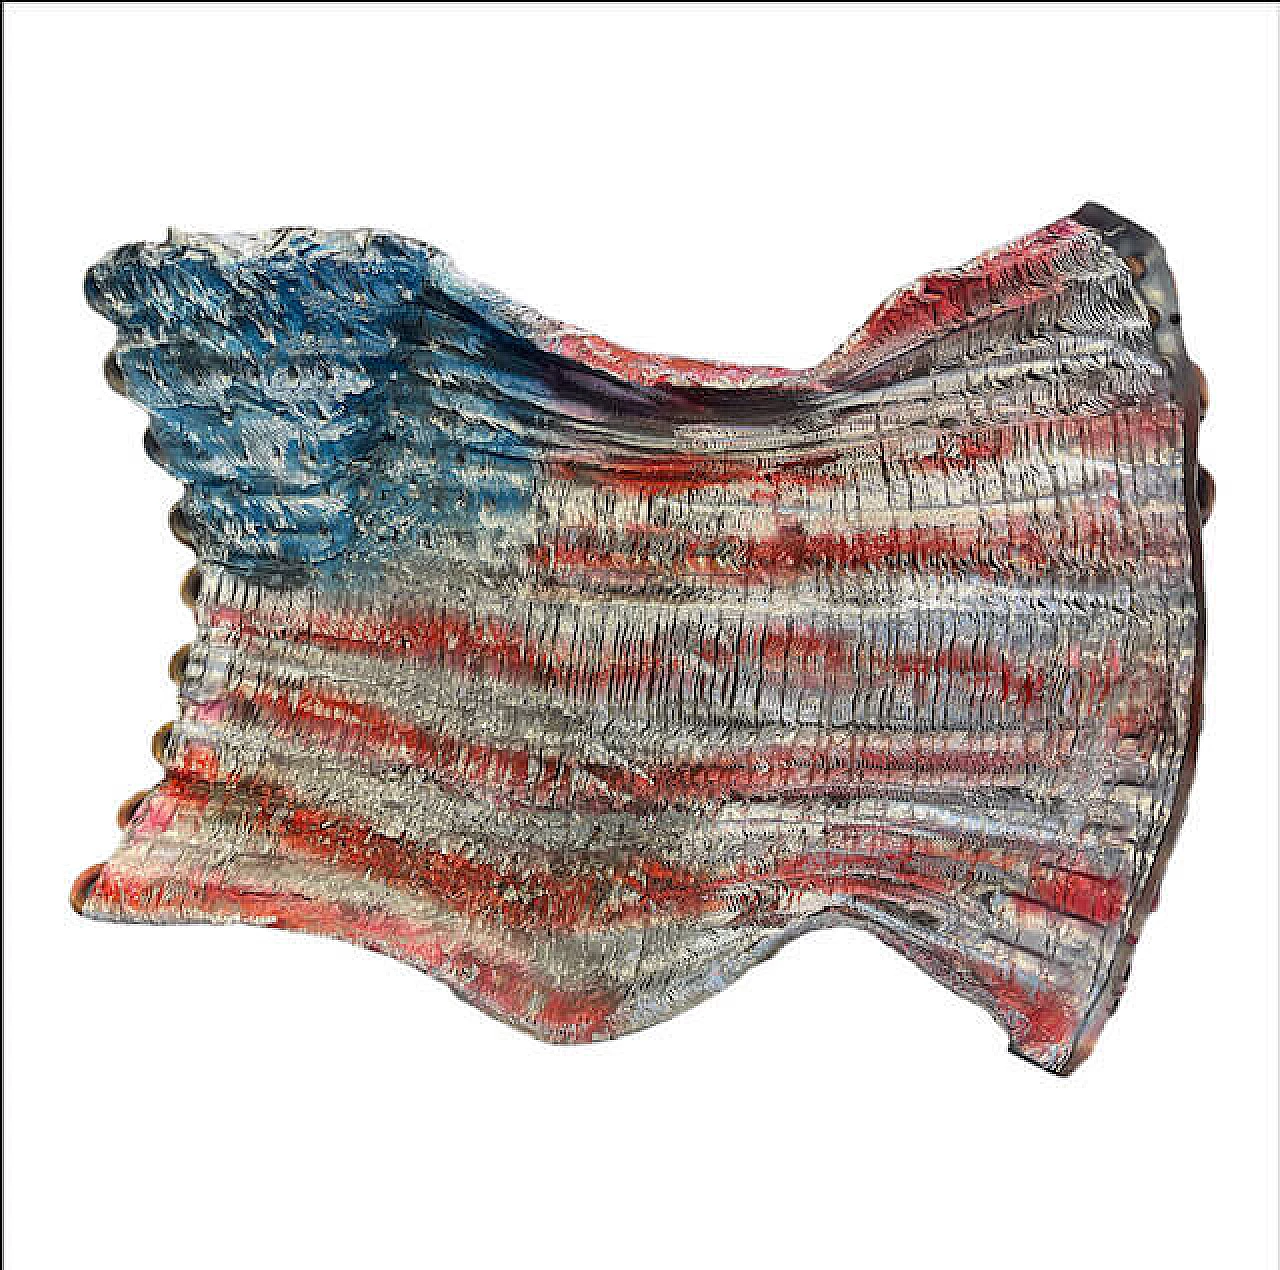 M'HORÒ sculpture depicting the American flag 2